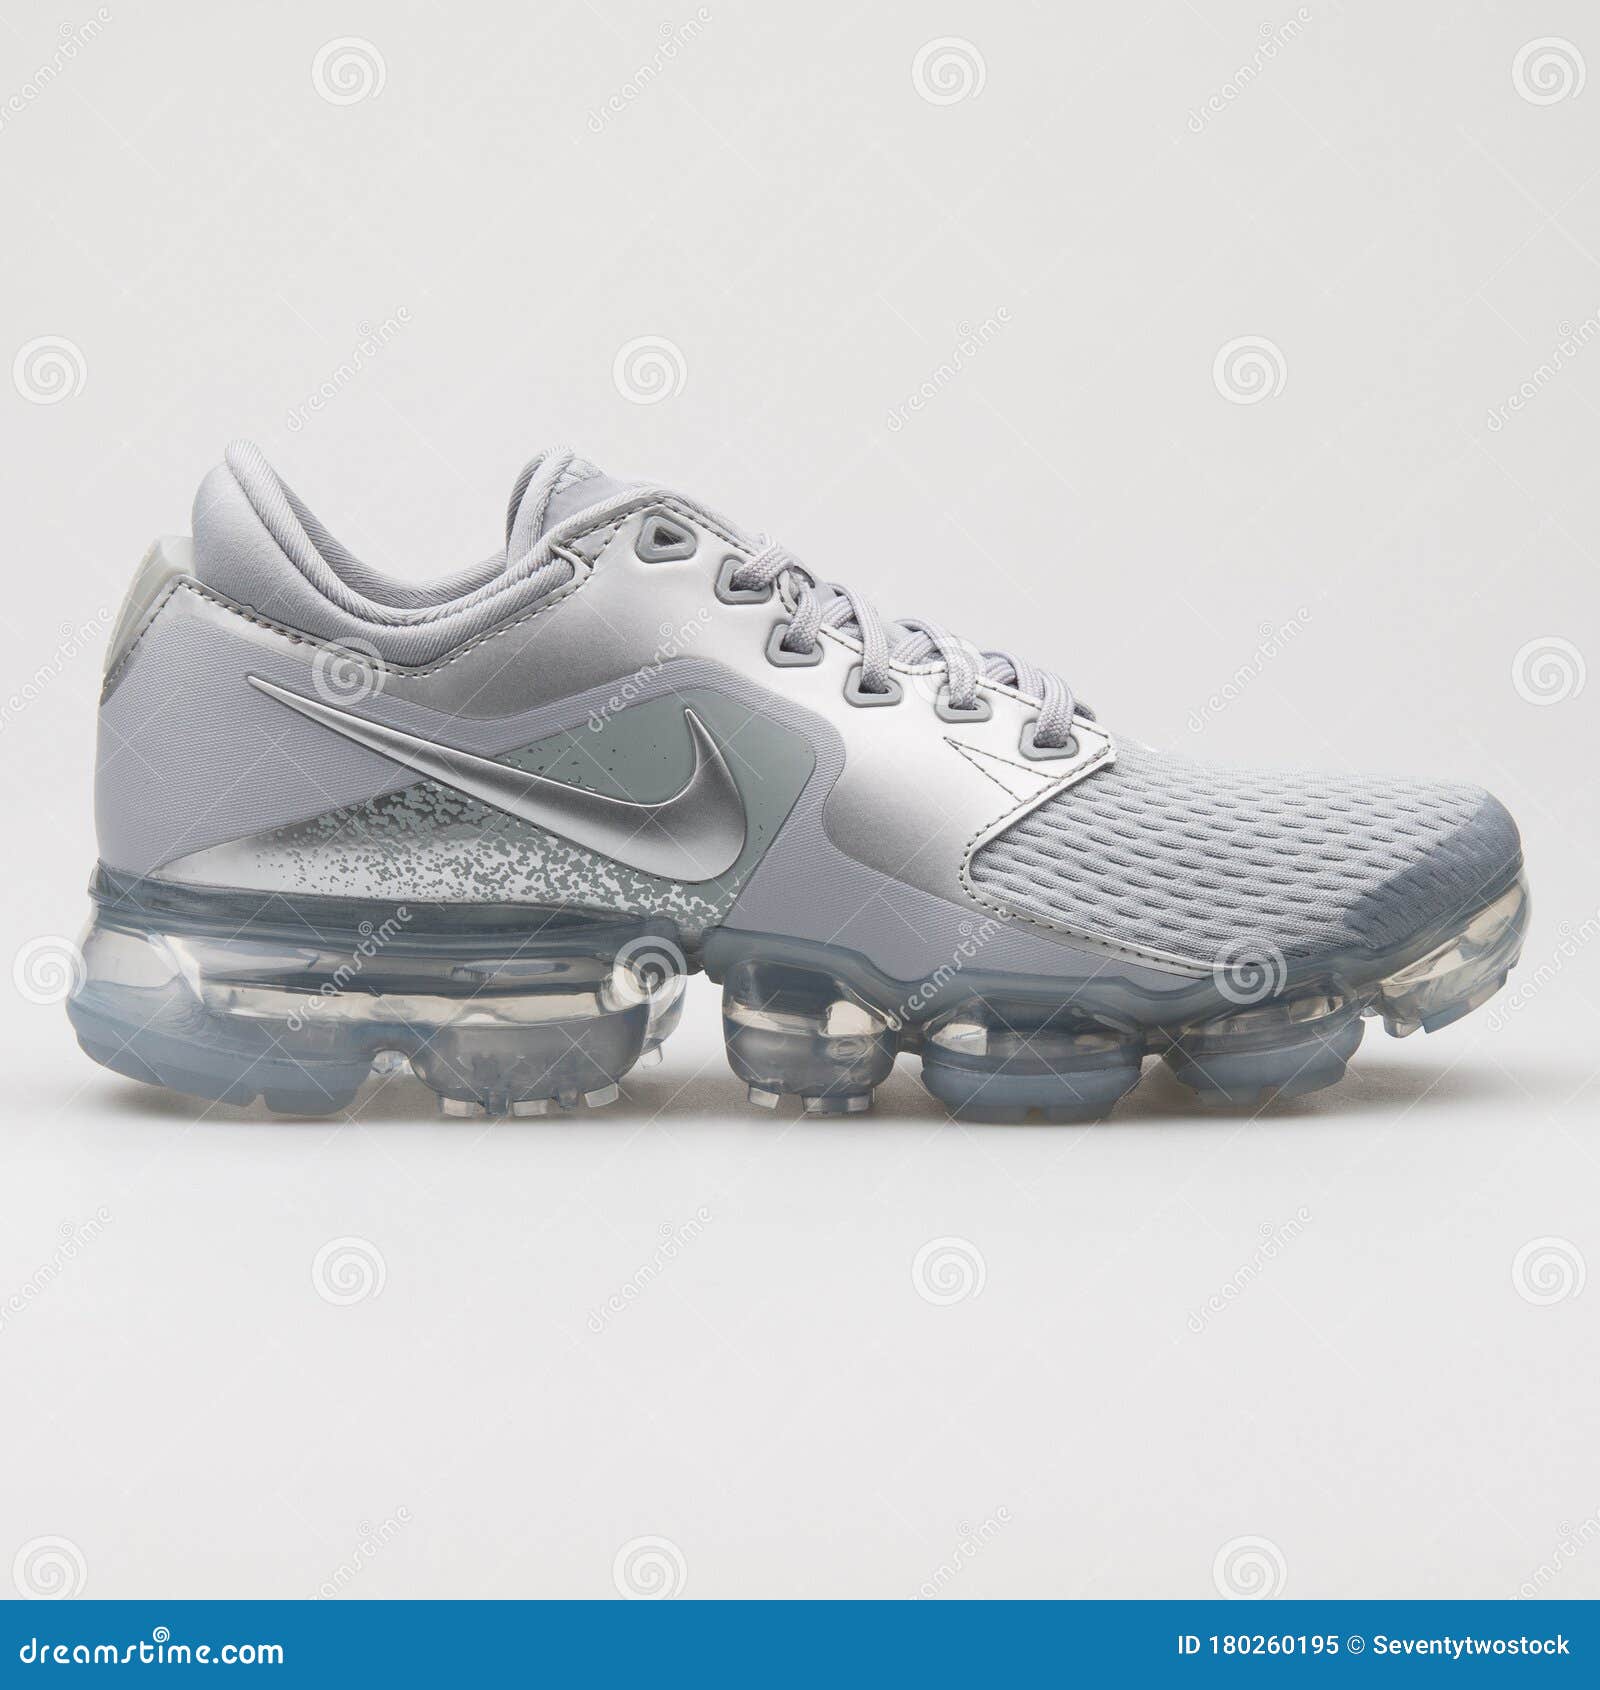 Nike Air Vapormax Grey and Metallic Silver Sneaker Editorial Image ...